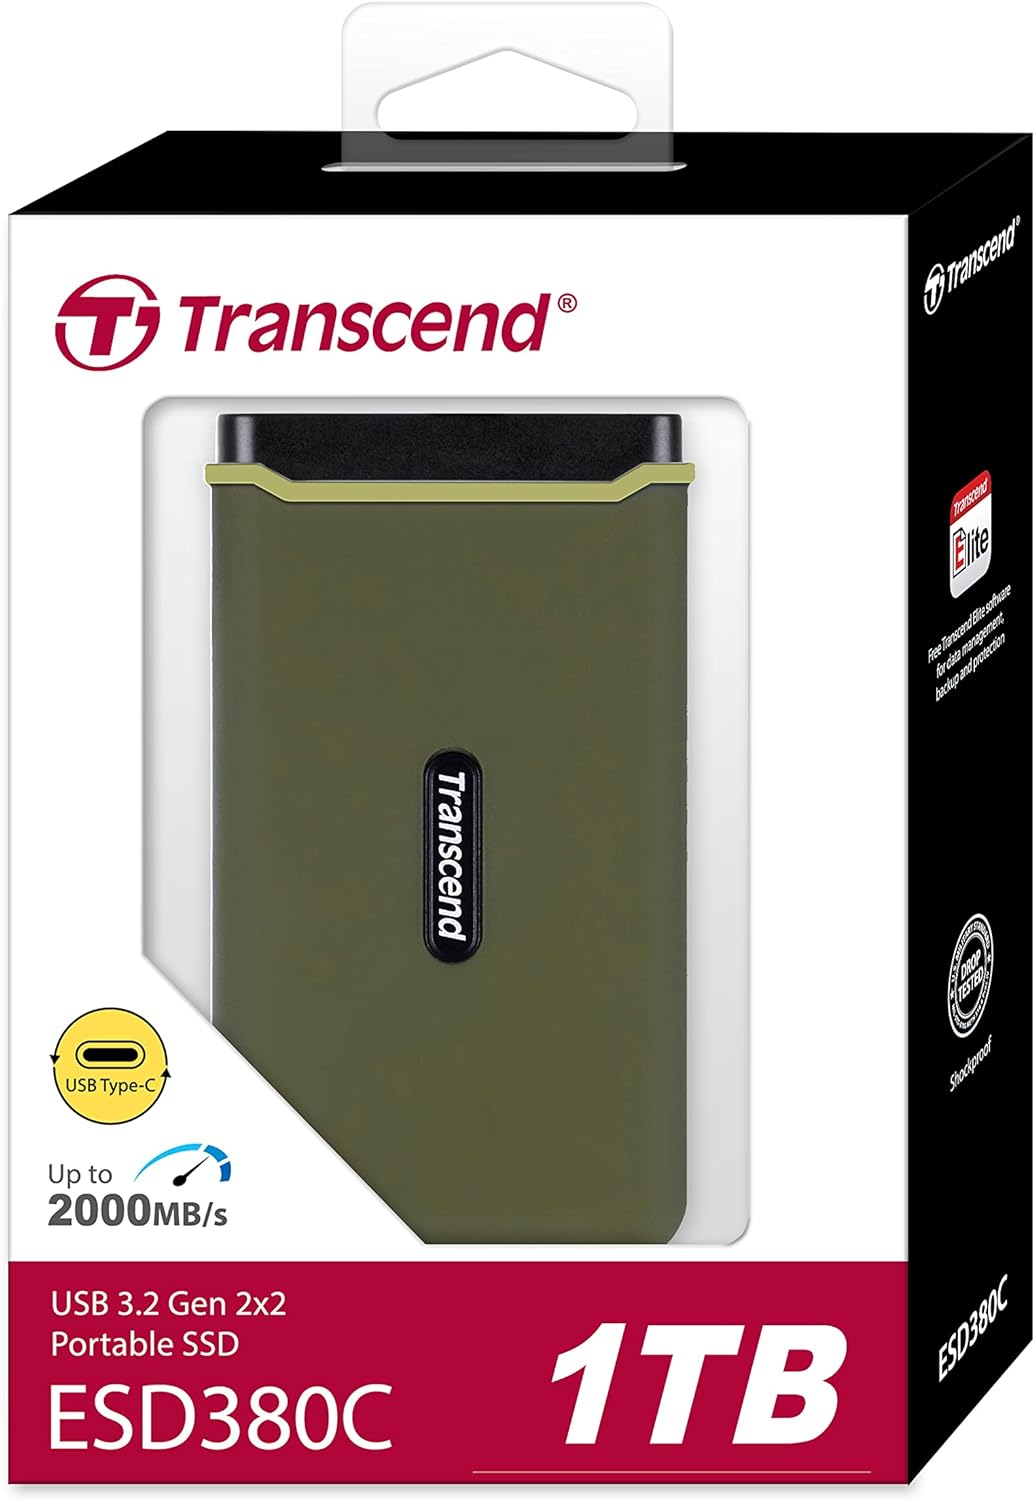 Transcend 1TB USB 3.2 Gen 2x2 USB Type-C ESD380C Portable Rugged SSD External Hard Drive (Brand New)